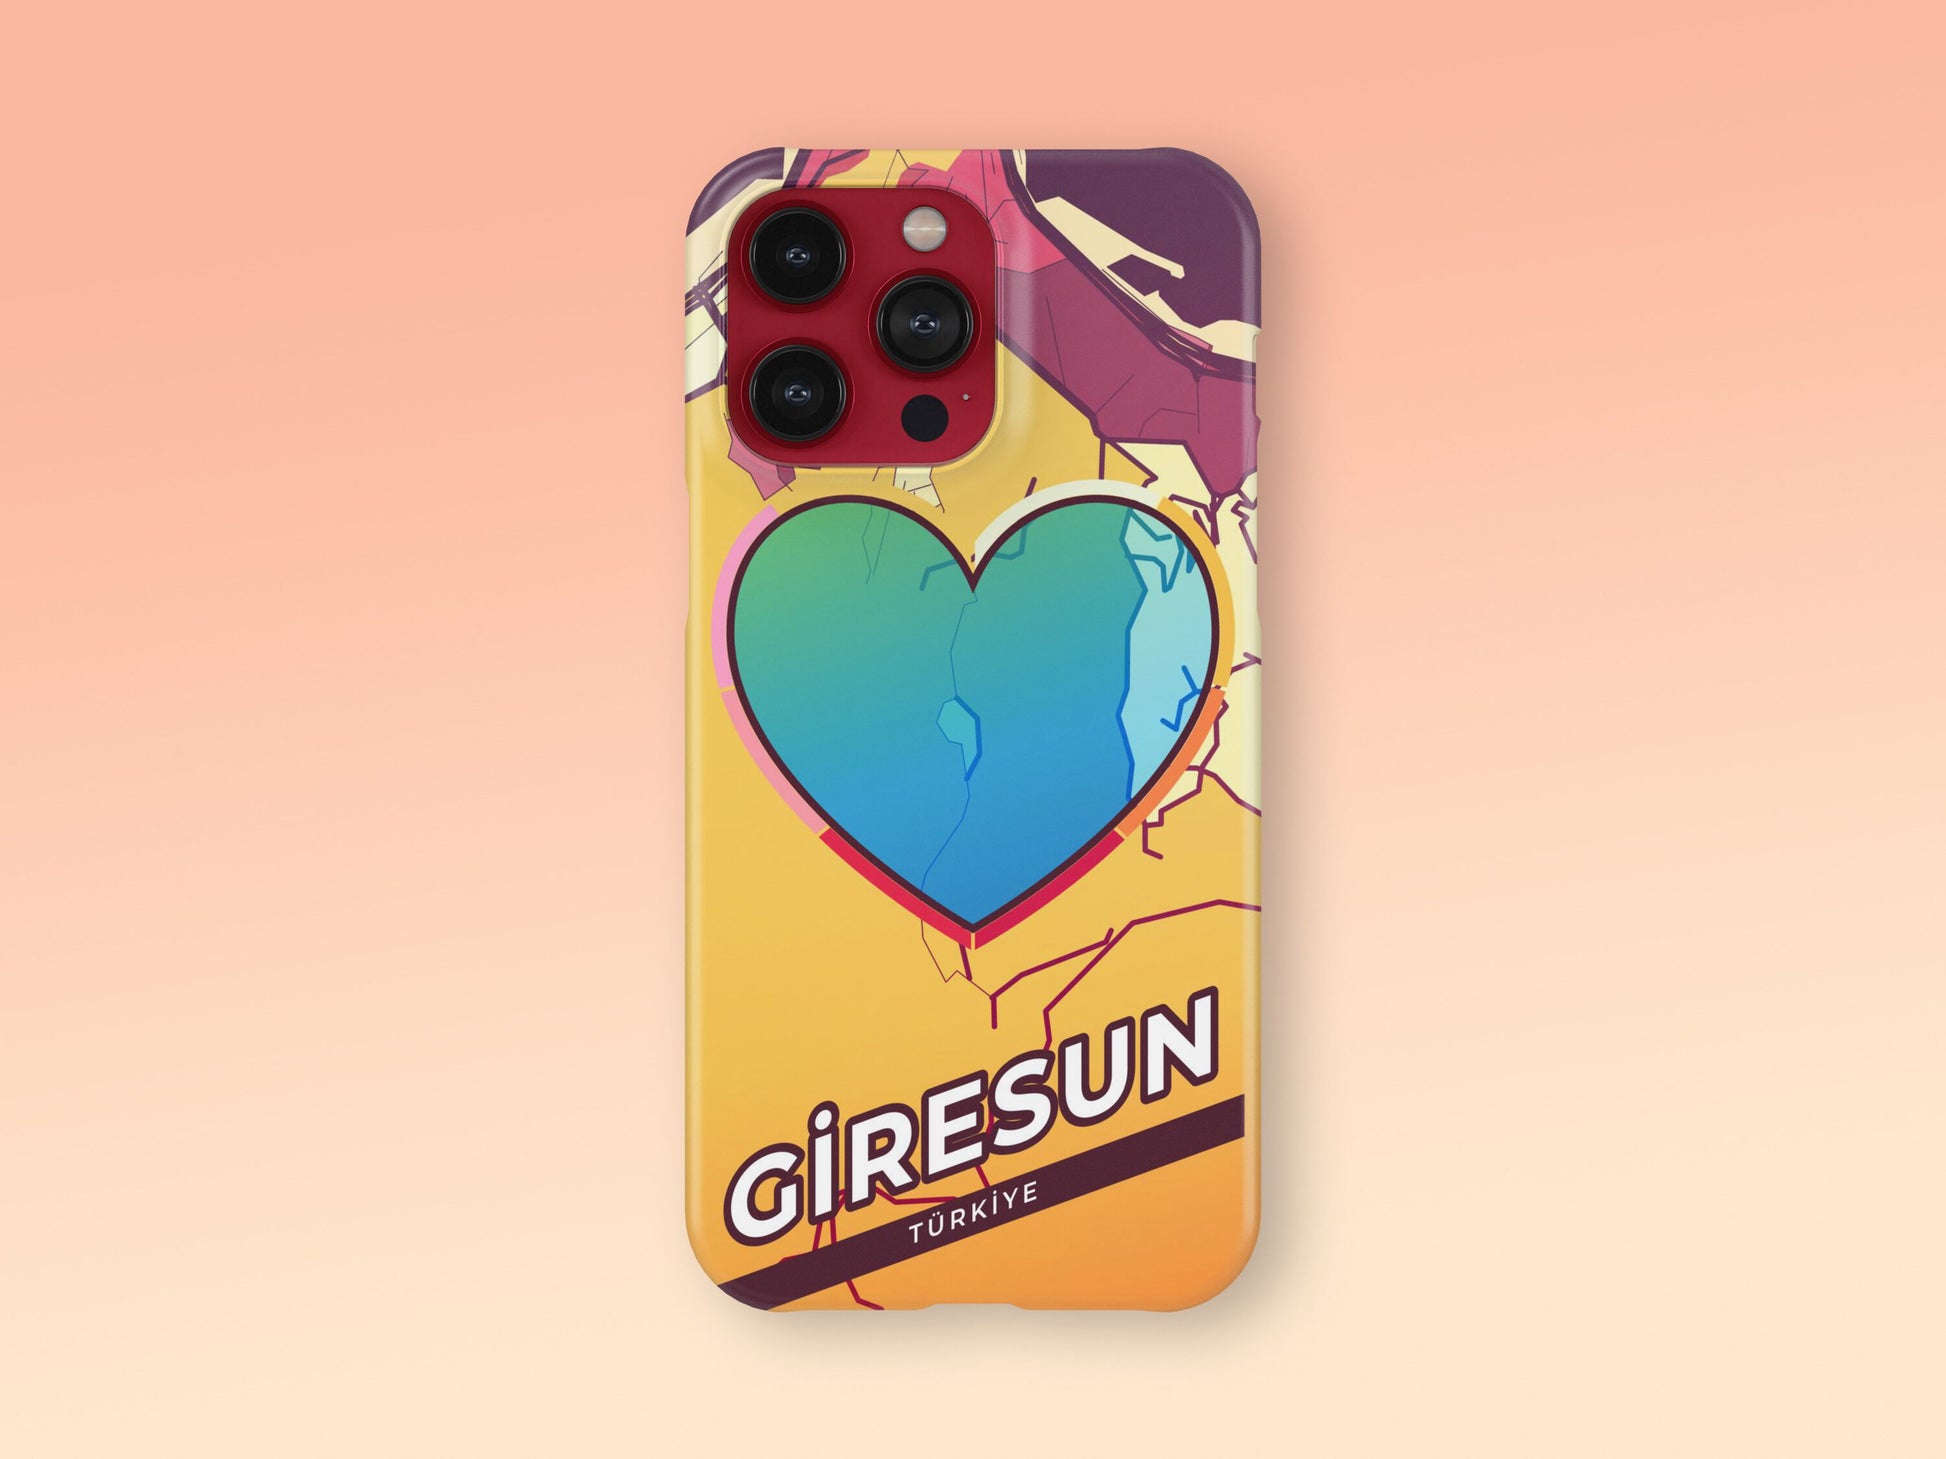 Giresun Turkey slim phone case with colorful icon. Birthday, wedding or housewarming gift. Couple match cases. 2